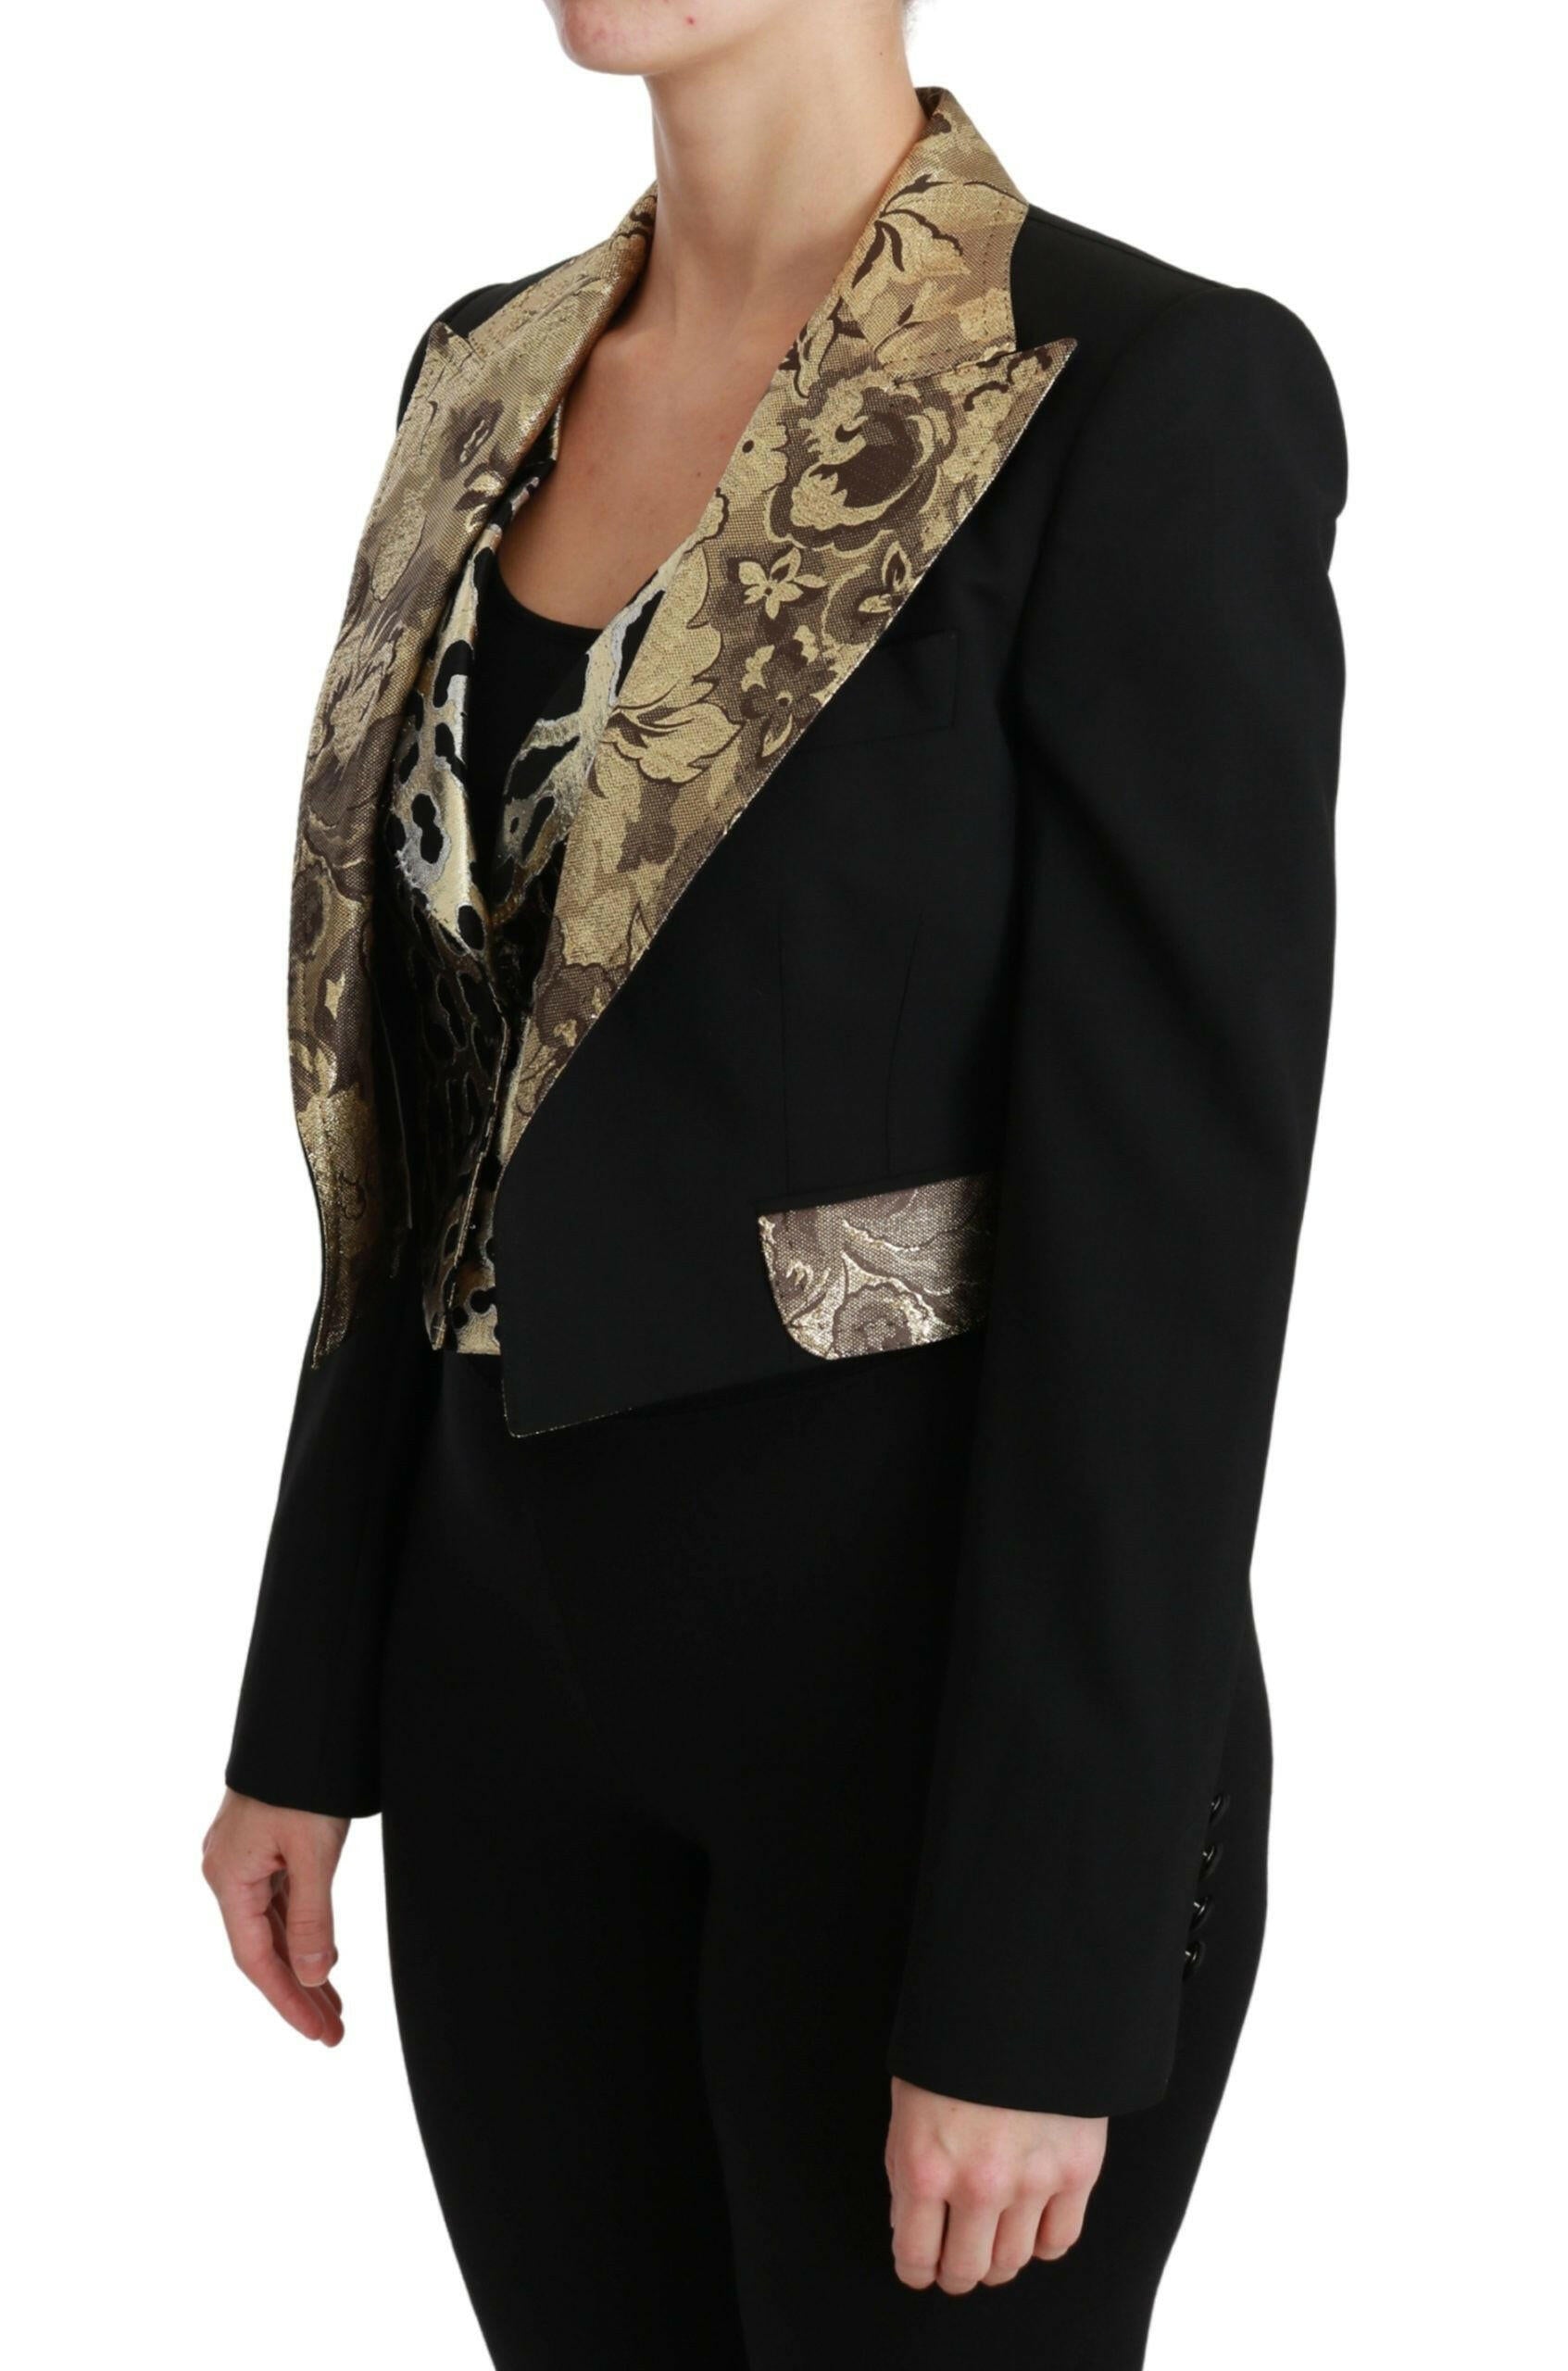 Dolce & Gabbana Black Jacquard Vest Blazer Coat Wool Jacket - GENUINE AUTHENTIC BRAND LLC  